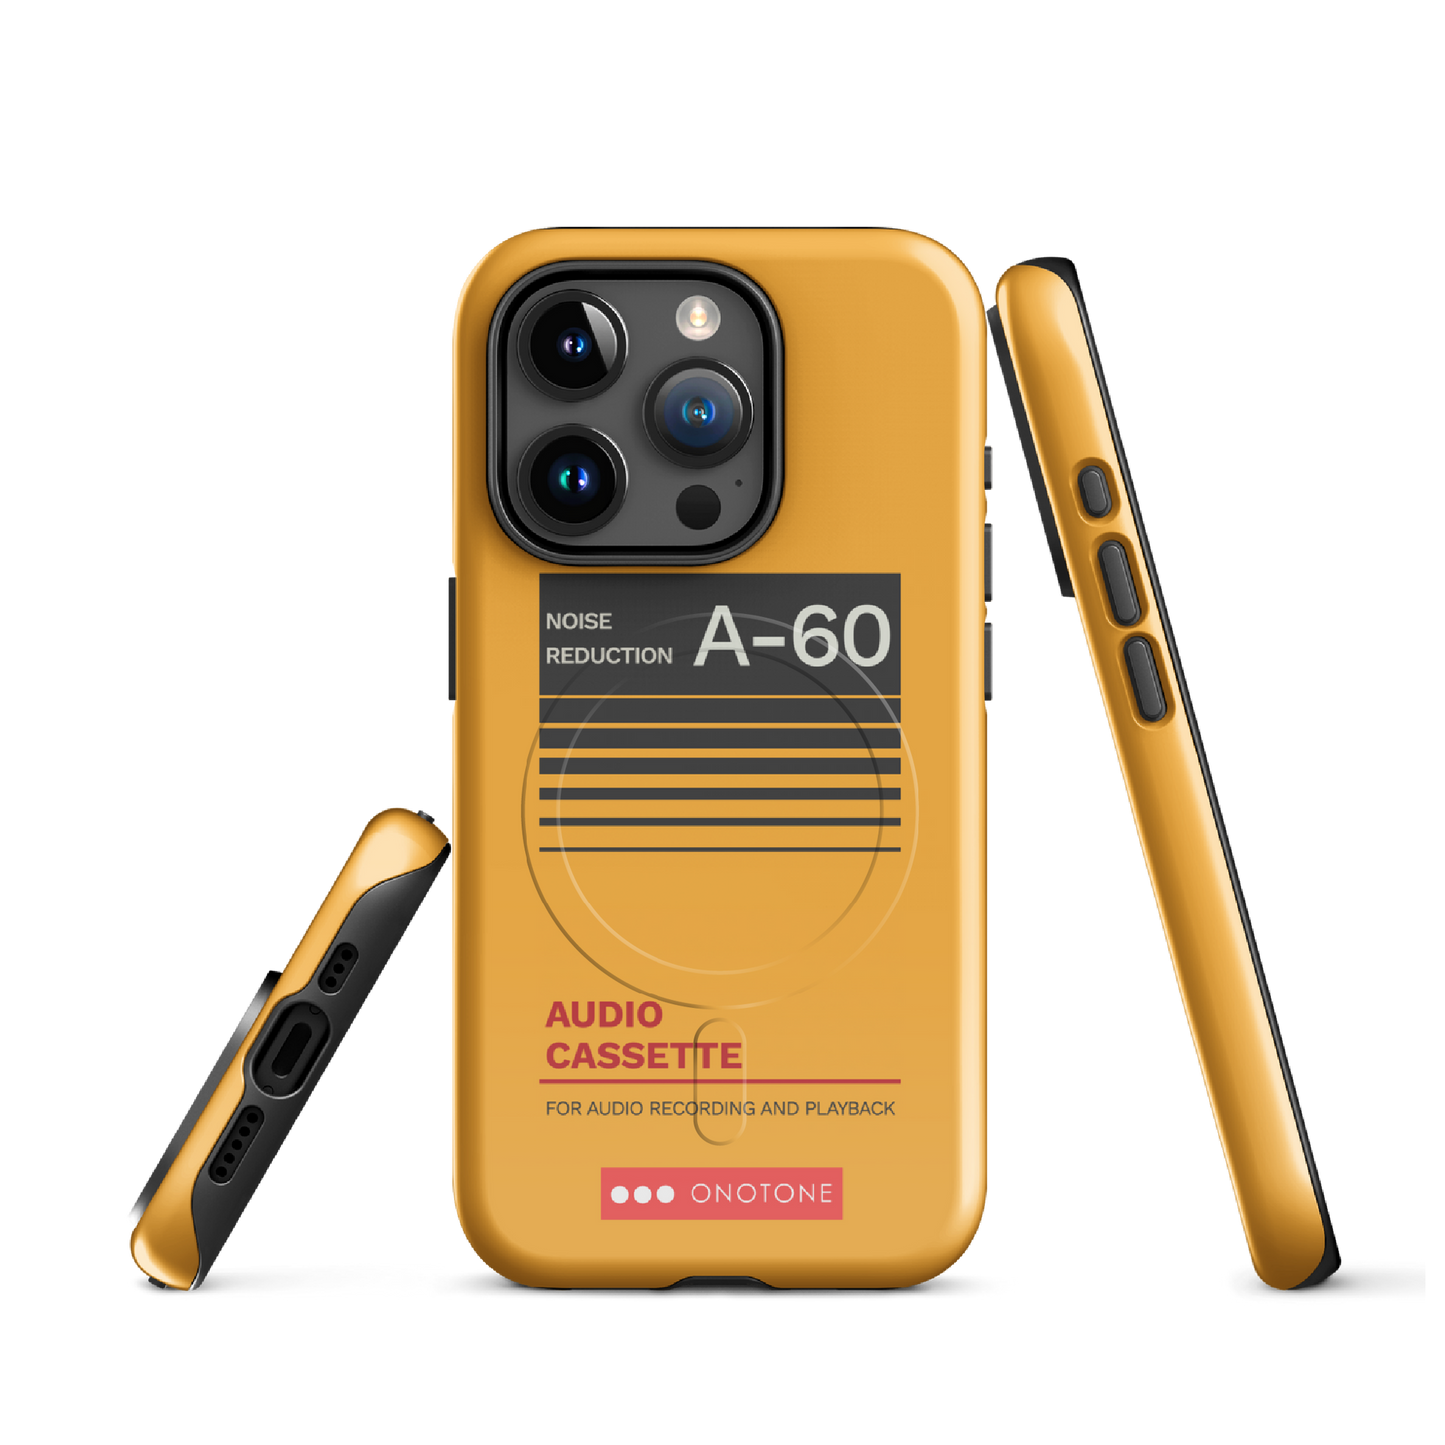 Dual Layer audio casette modern iPhone® Case